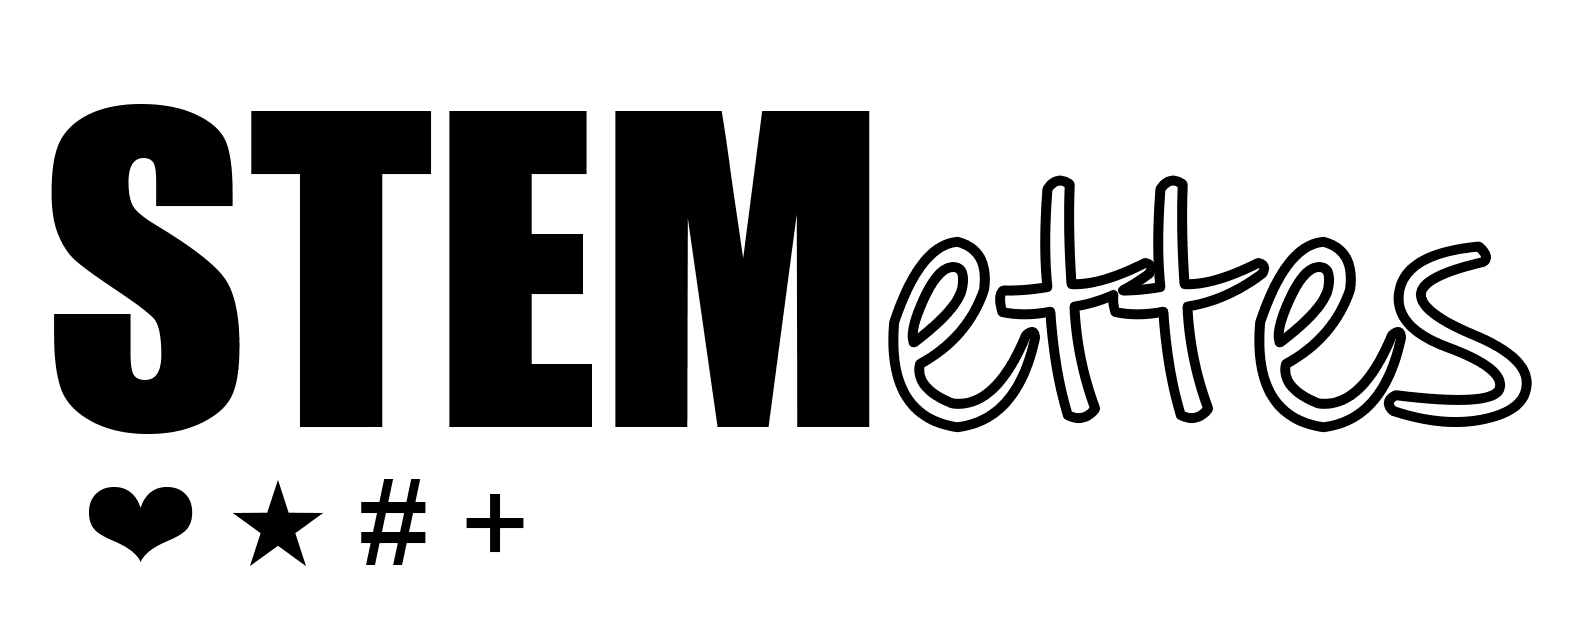 STEMettes logo